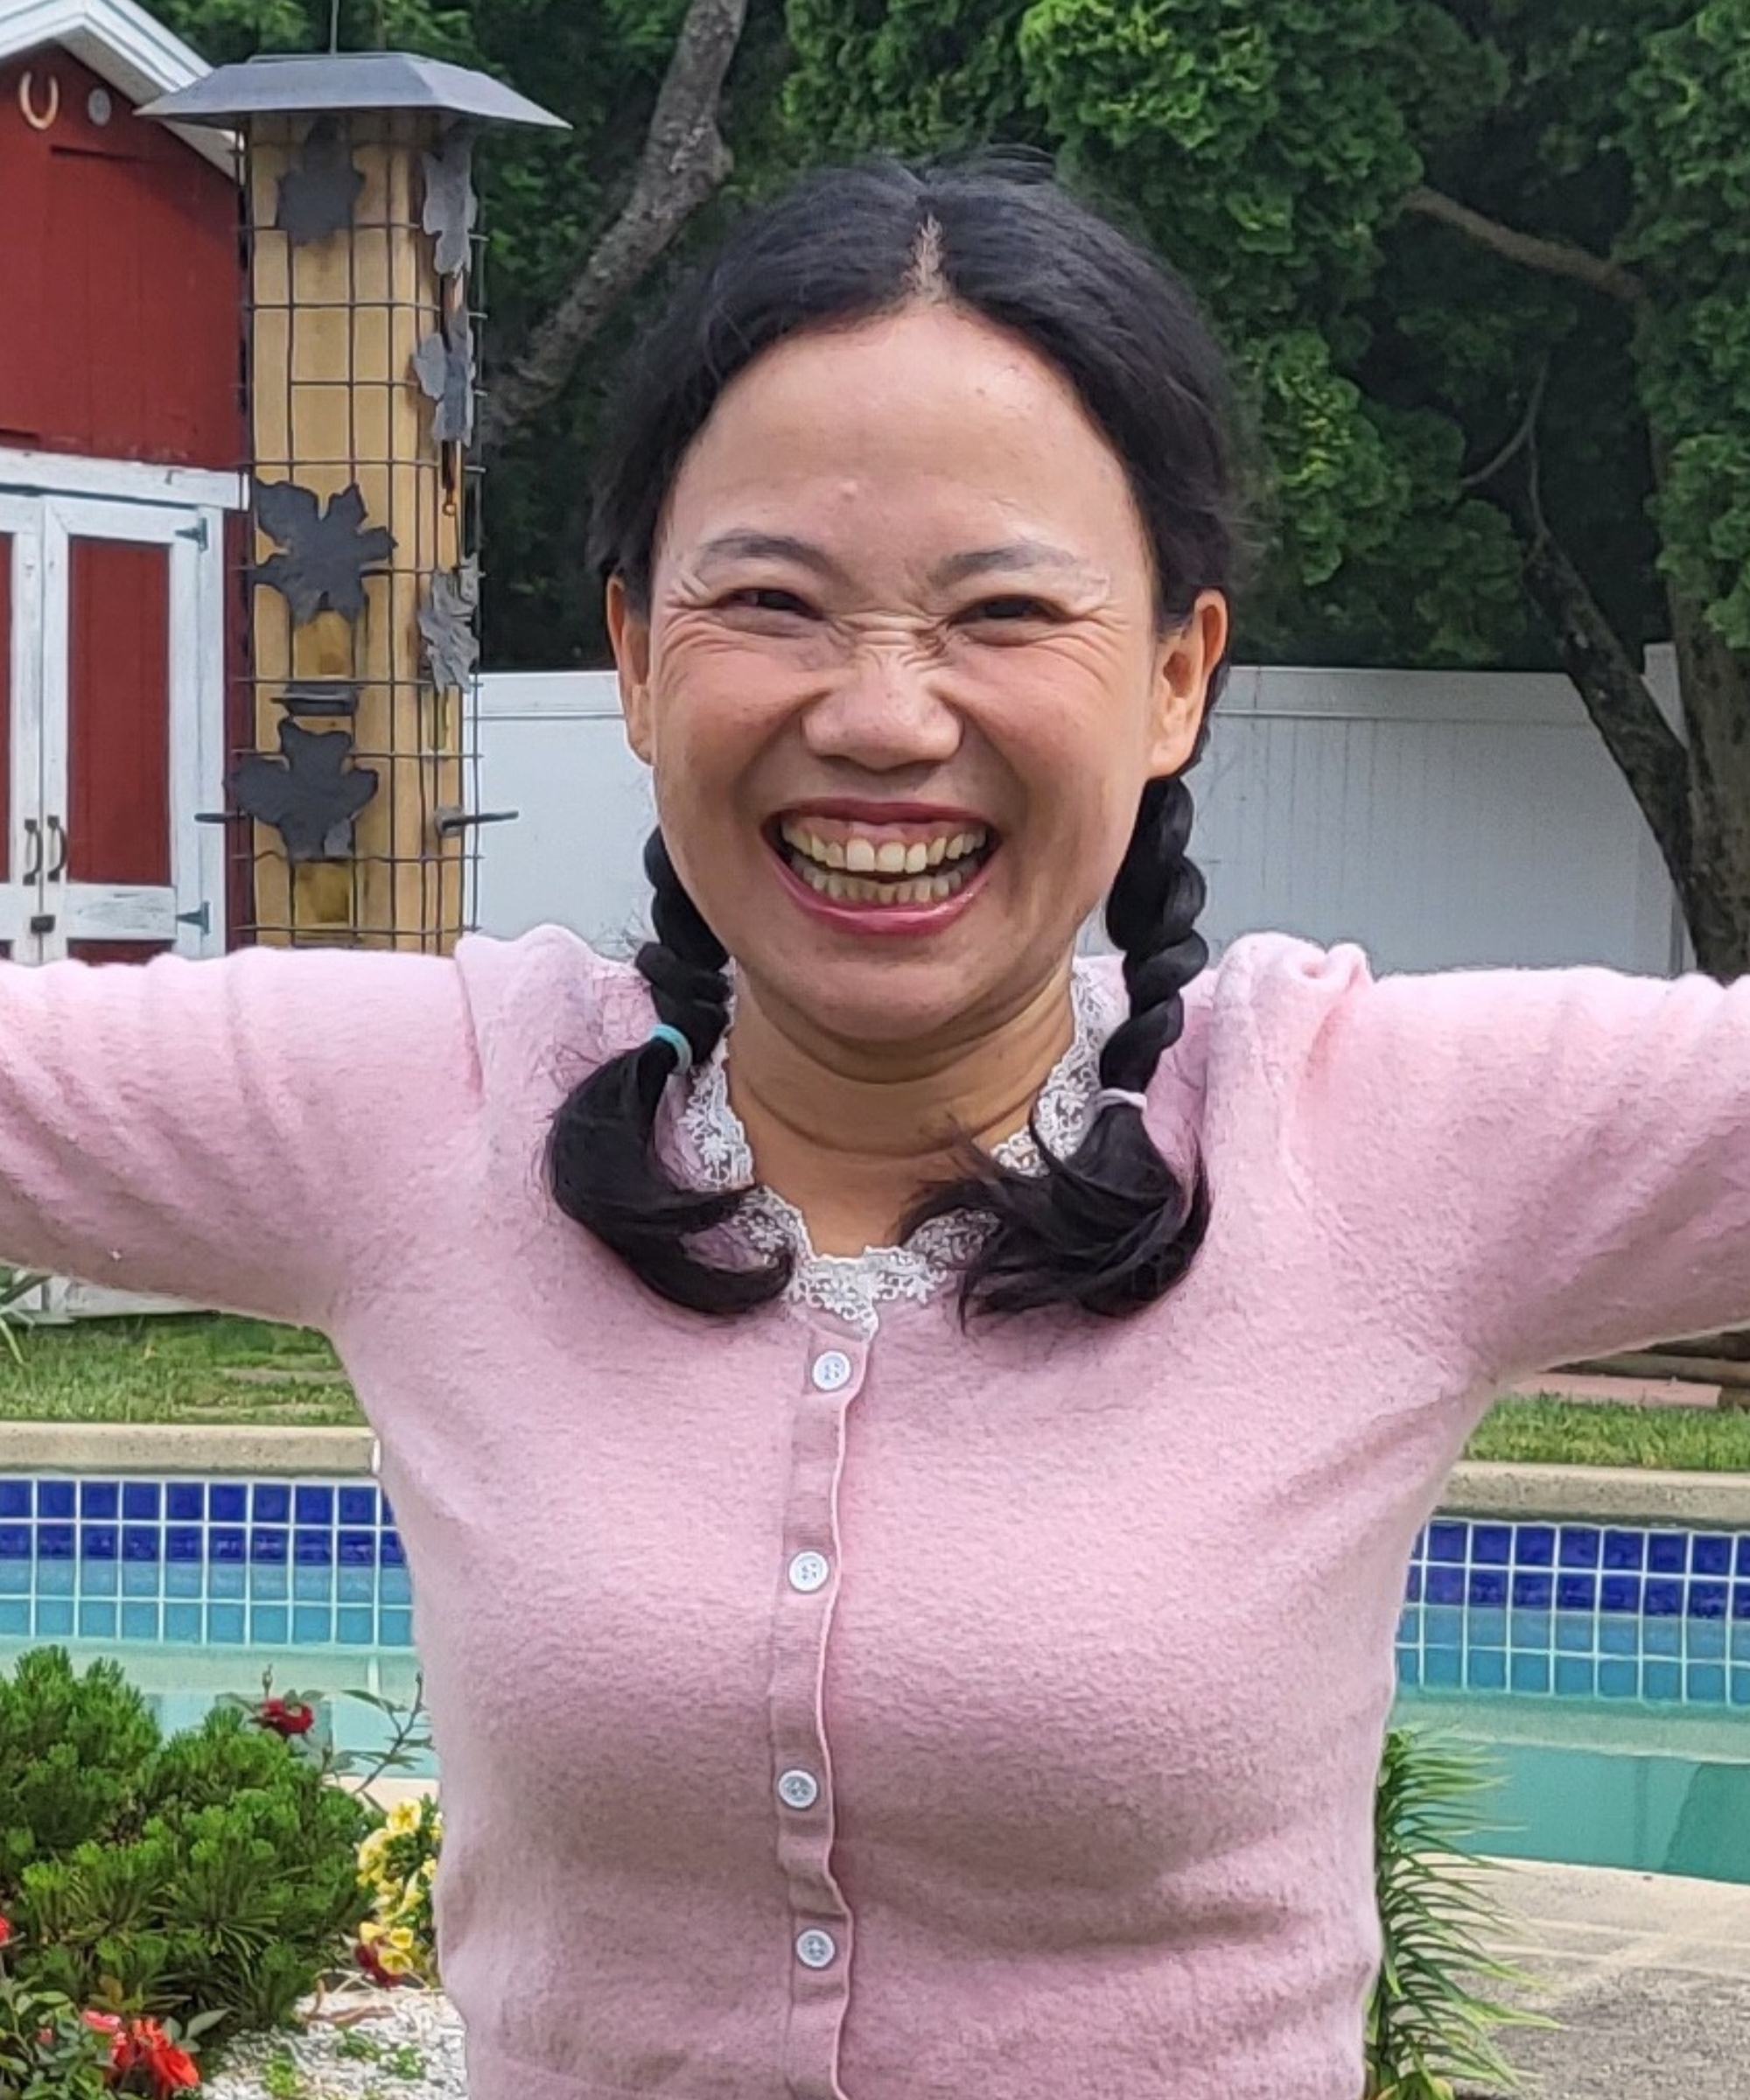 Profile photo of Wendy Wang, looking happy